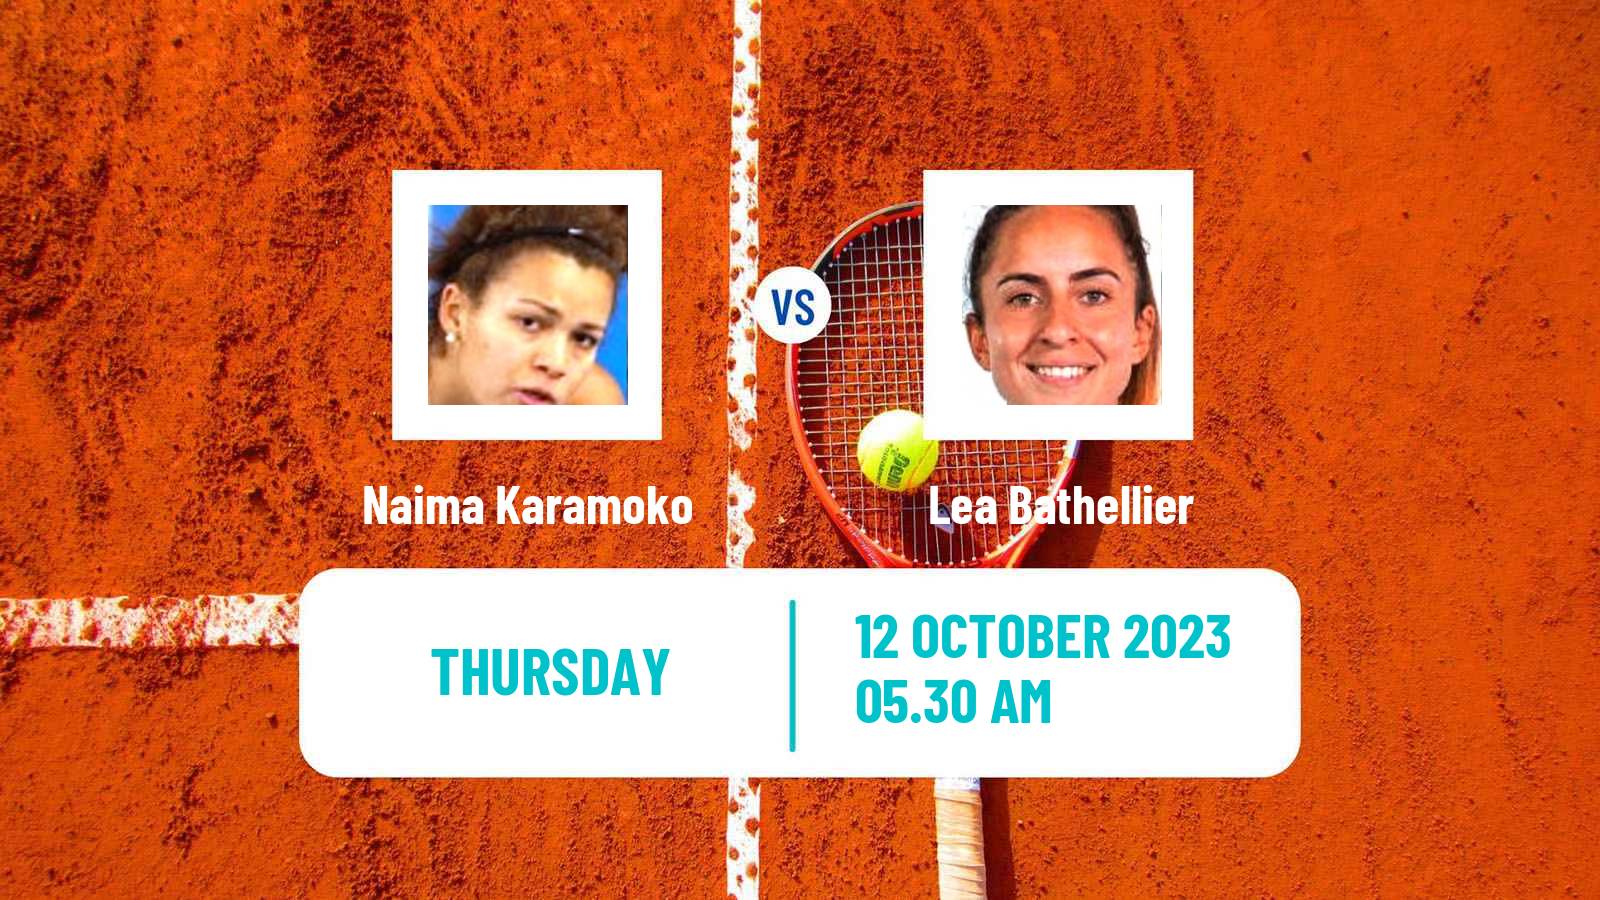 Tennis ITF W15 Monastir 36 Women Naima Karamoko - Lea Bathellier